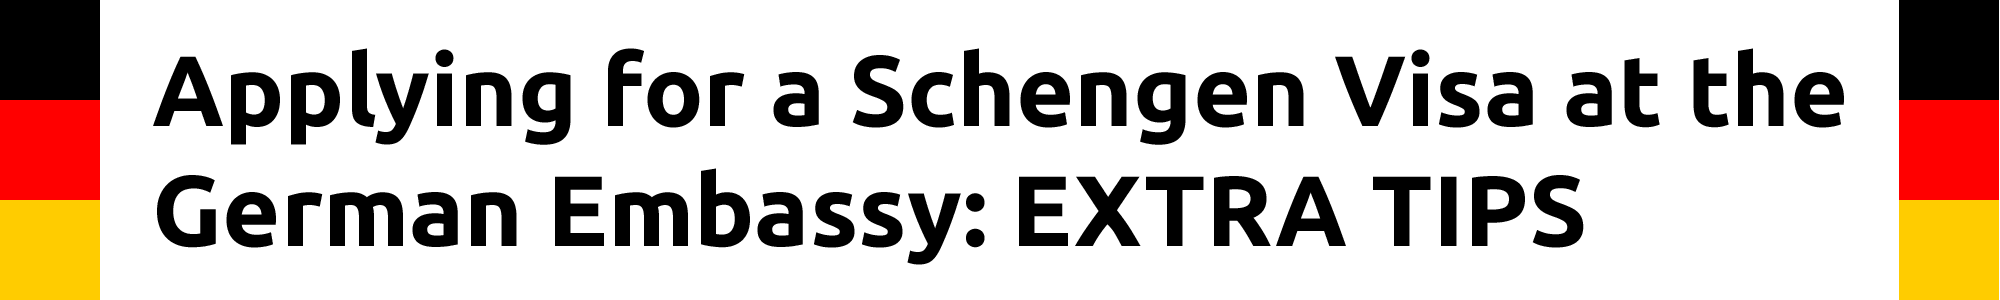 Applying for a Schengen visa at the German embassy_7_Extra tips